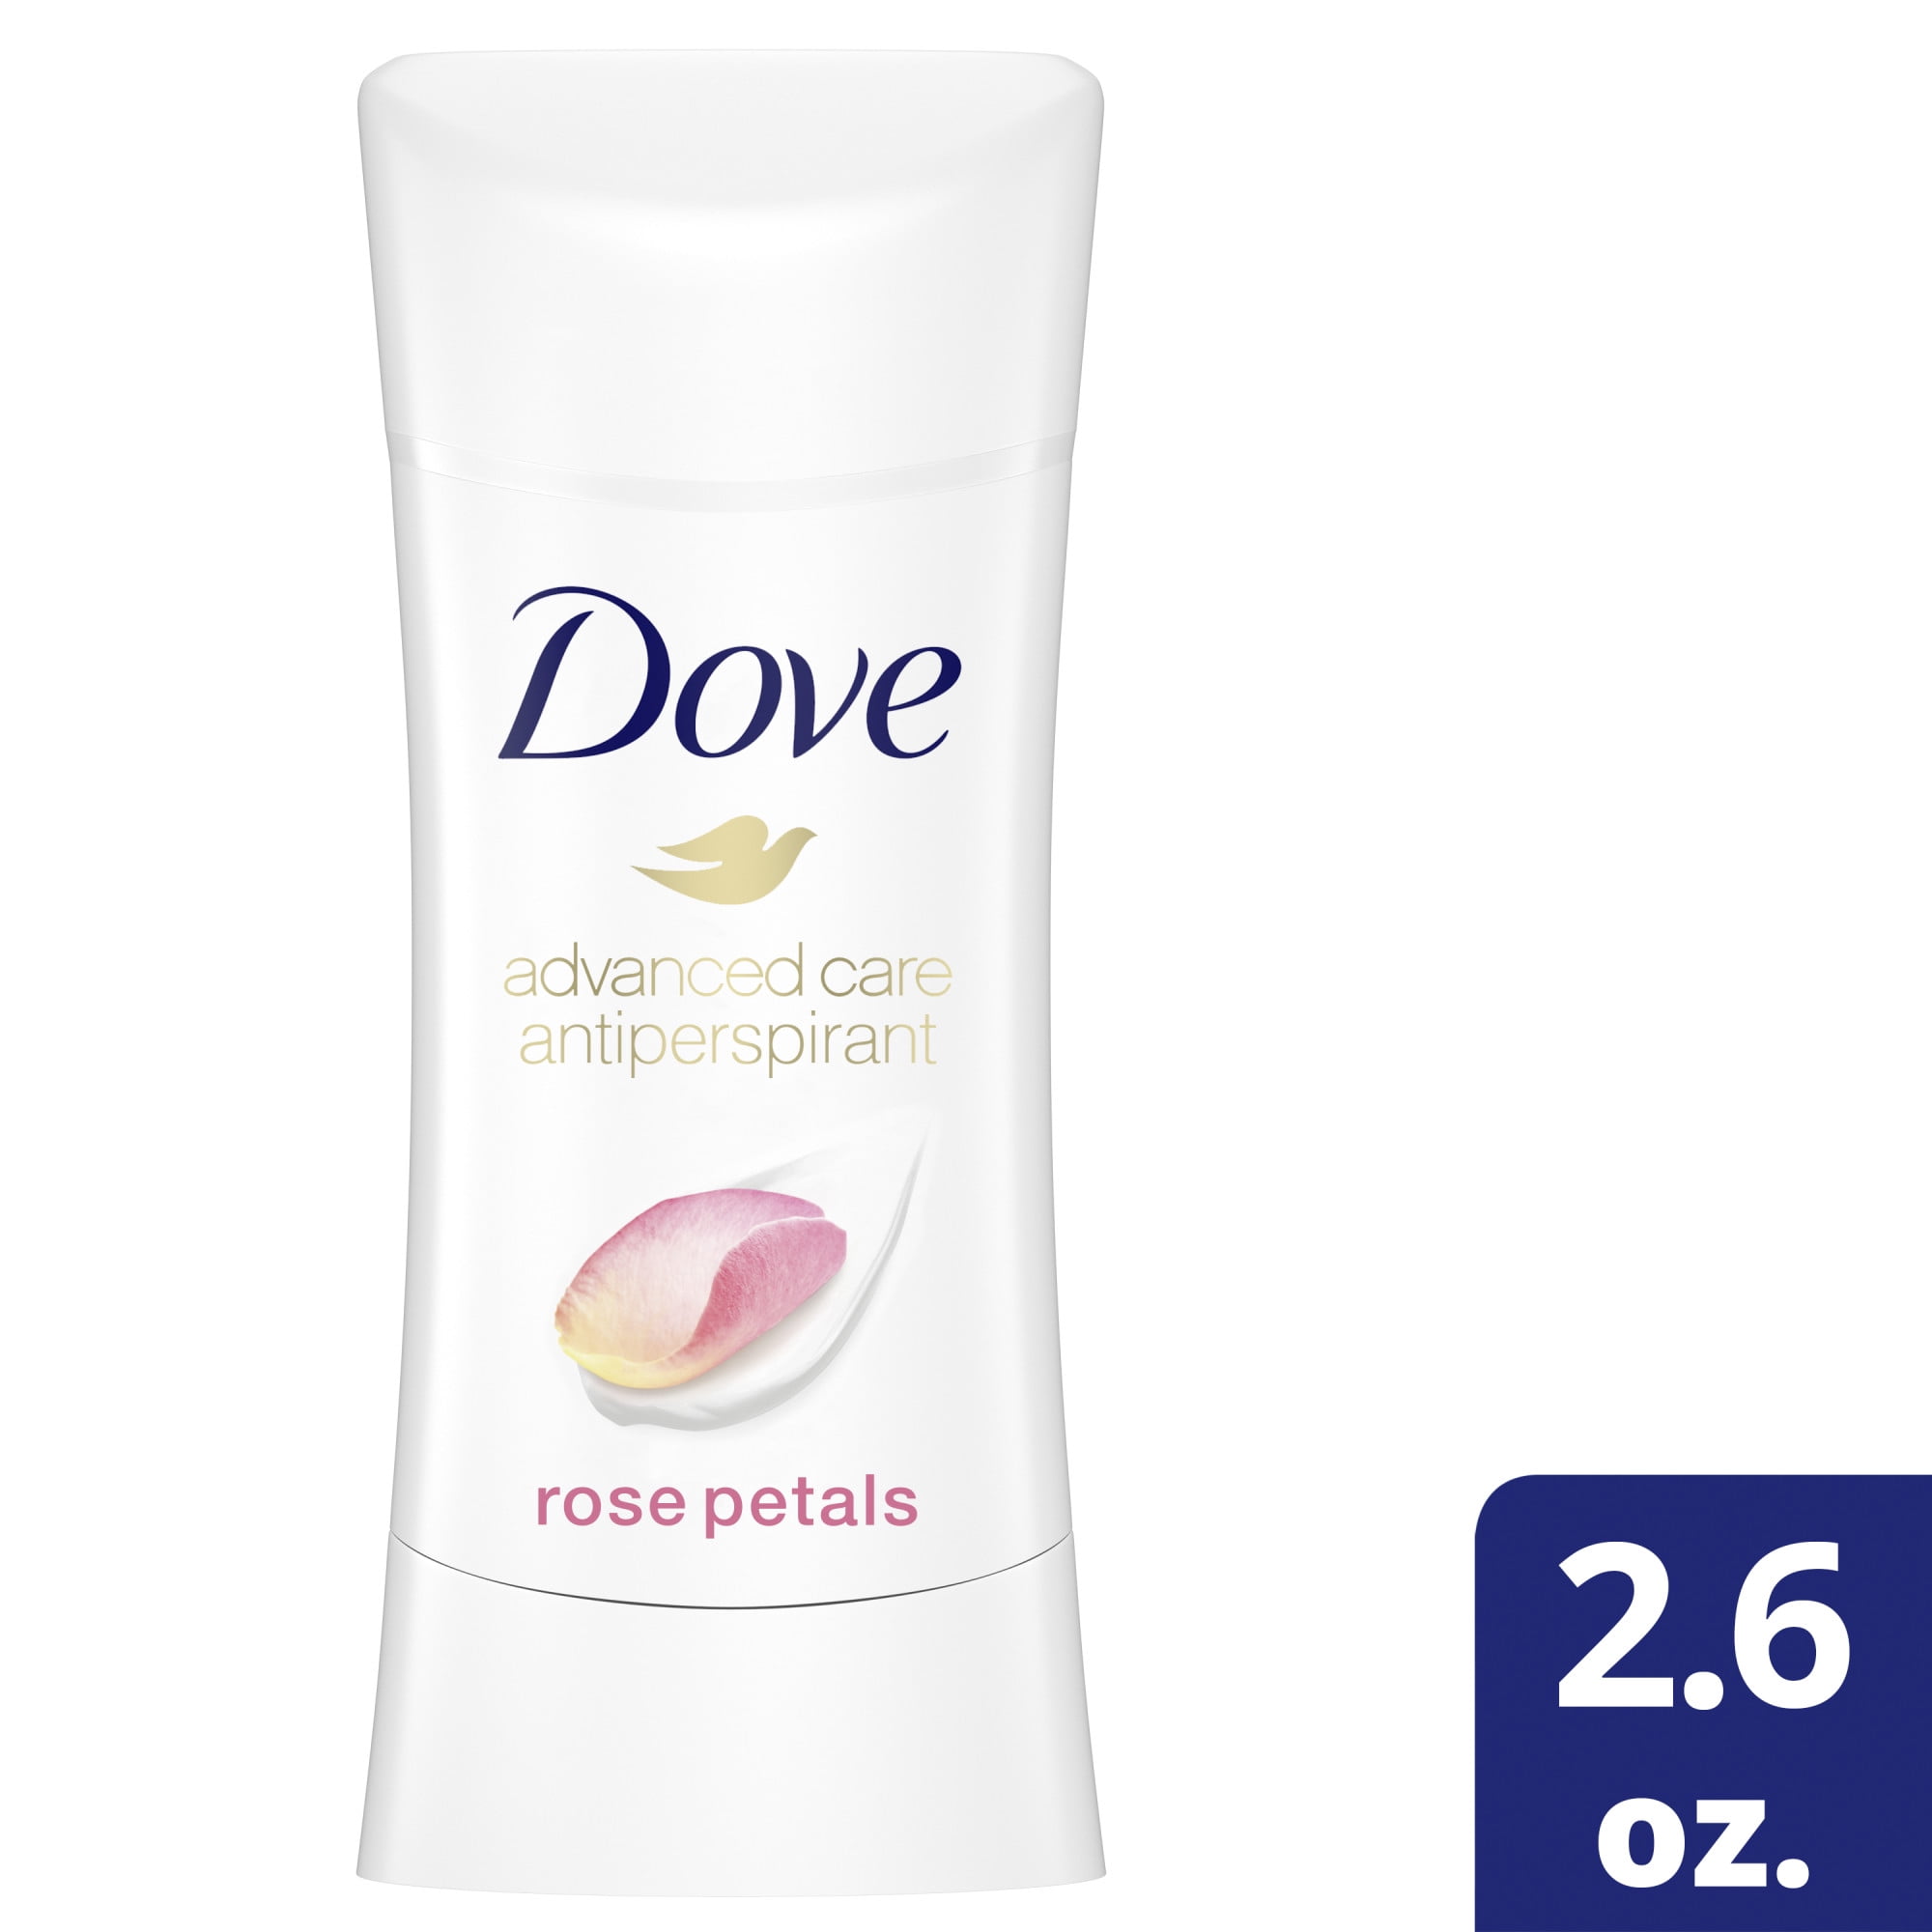 Dove Advanced Care Rose Petals Antiperspirant Deodorant 2.6 Oz